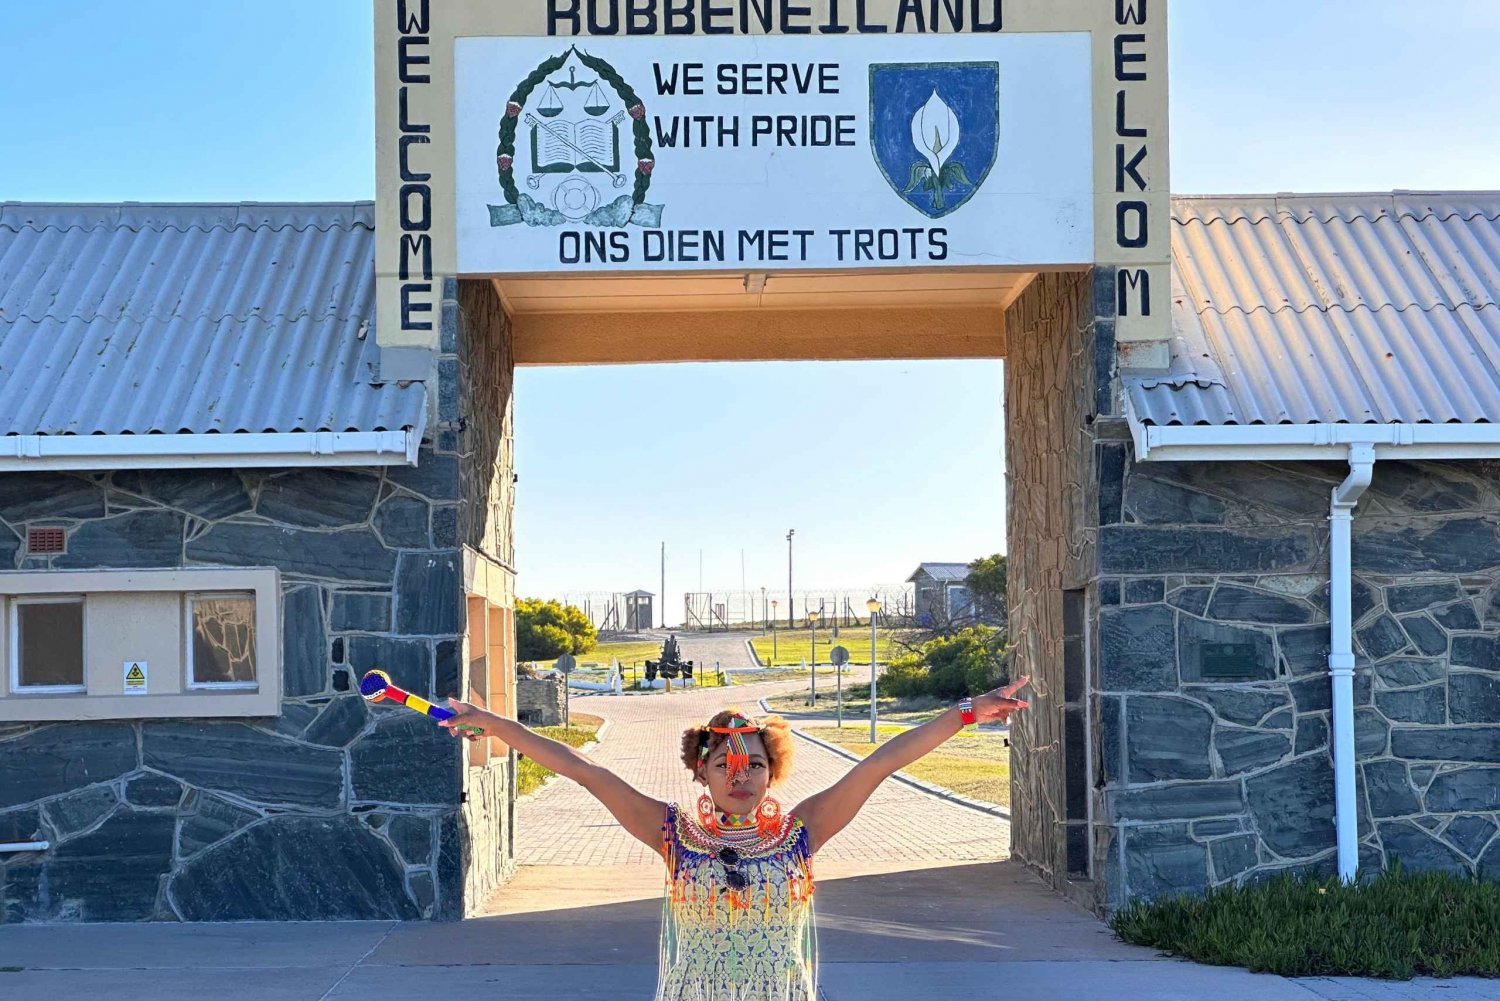 3-dagars privat rundtur: Det goda hoppet Taffelberget & Robben Island